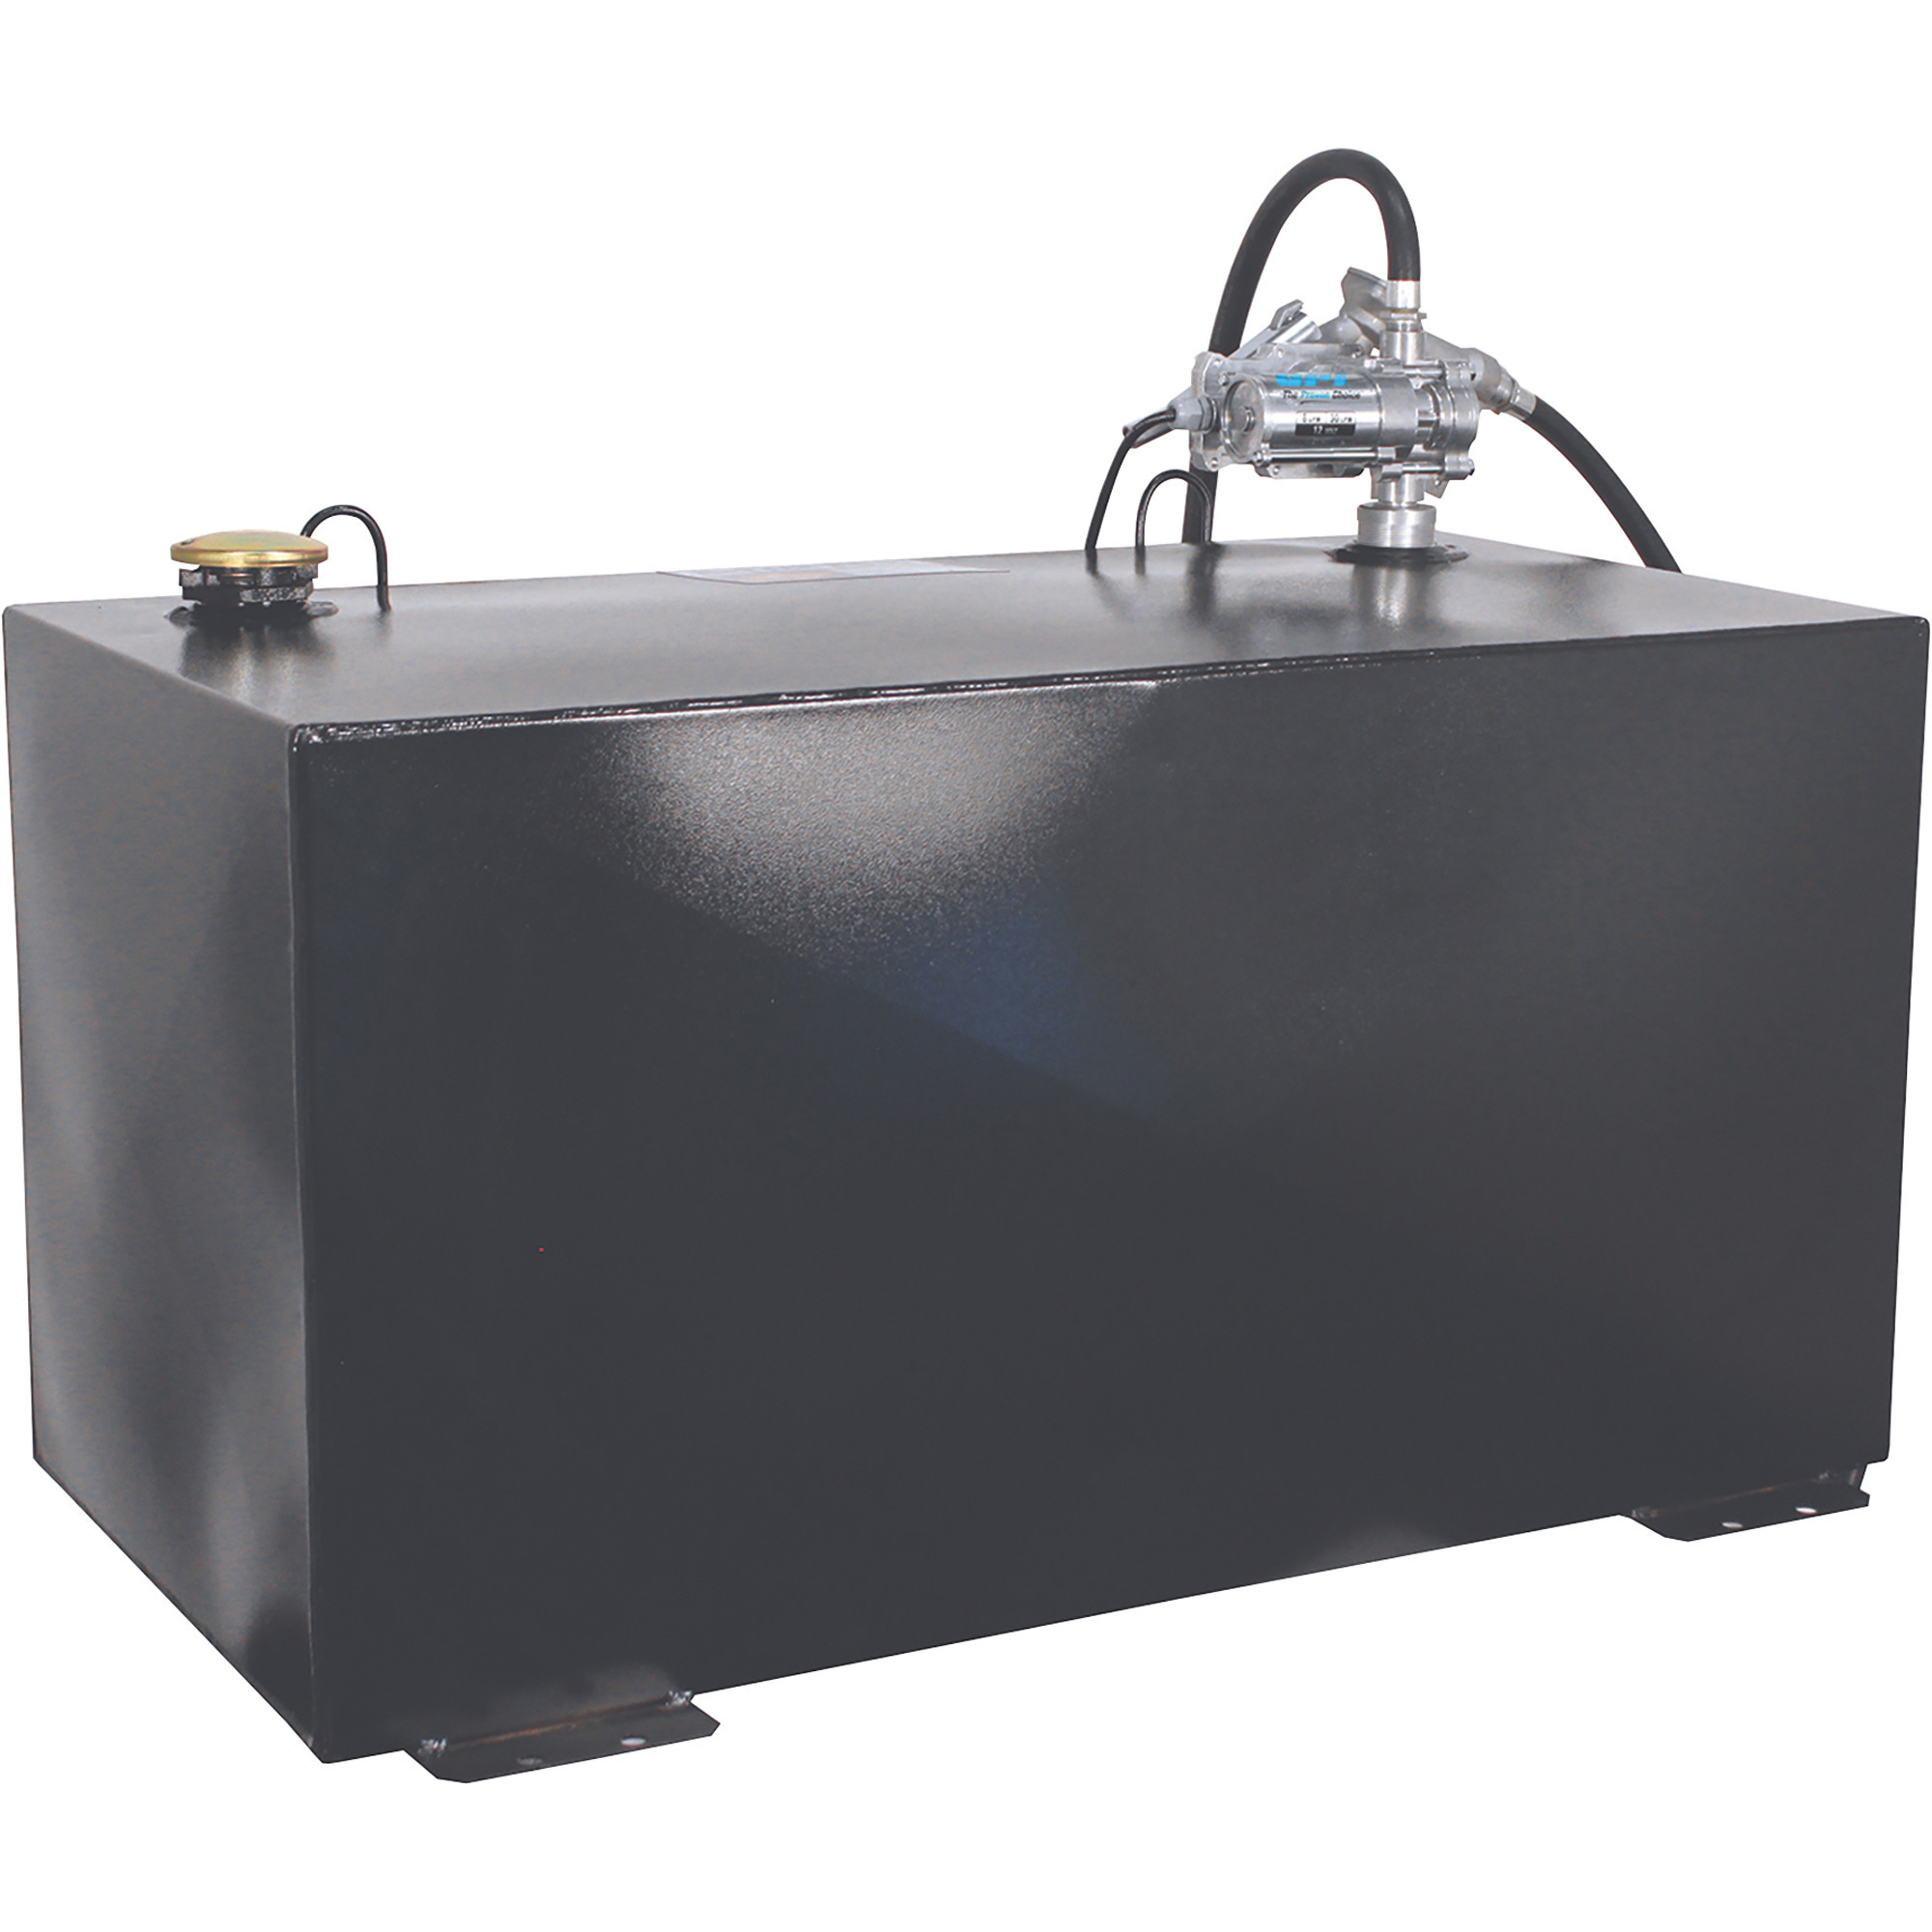 Better Built Steel Transfer Fuel Tank With GPI 12V Fuel Transfer Pump, 100-Gallon, Black, Rectangular, 8 GPM, Model 29214896